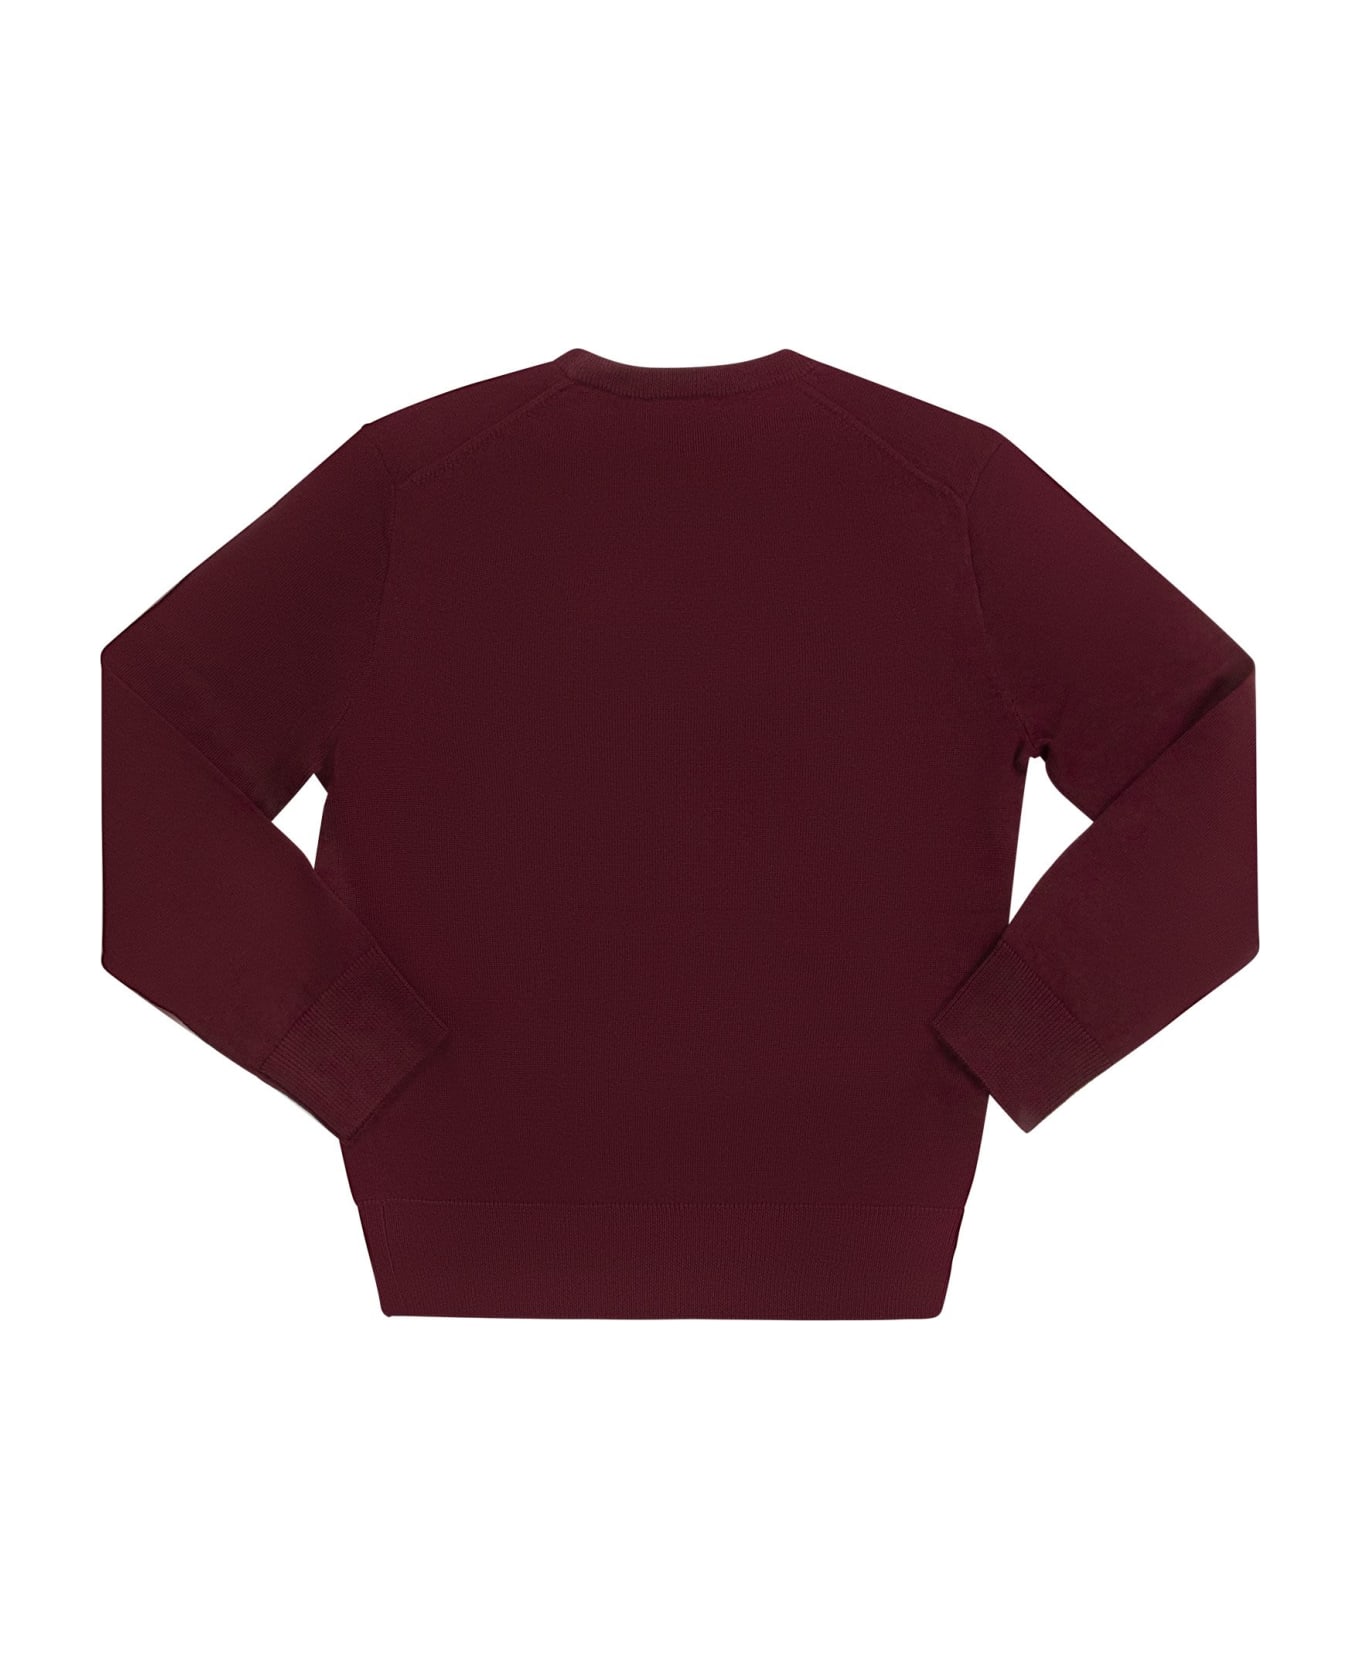 Polo Ralph Lauren Wool Crewneck Sweater - Bordeaux